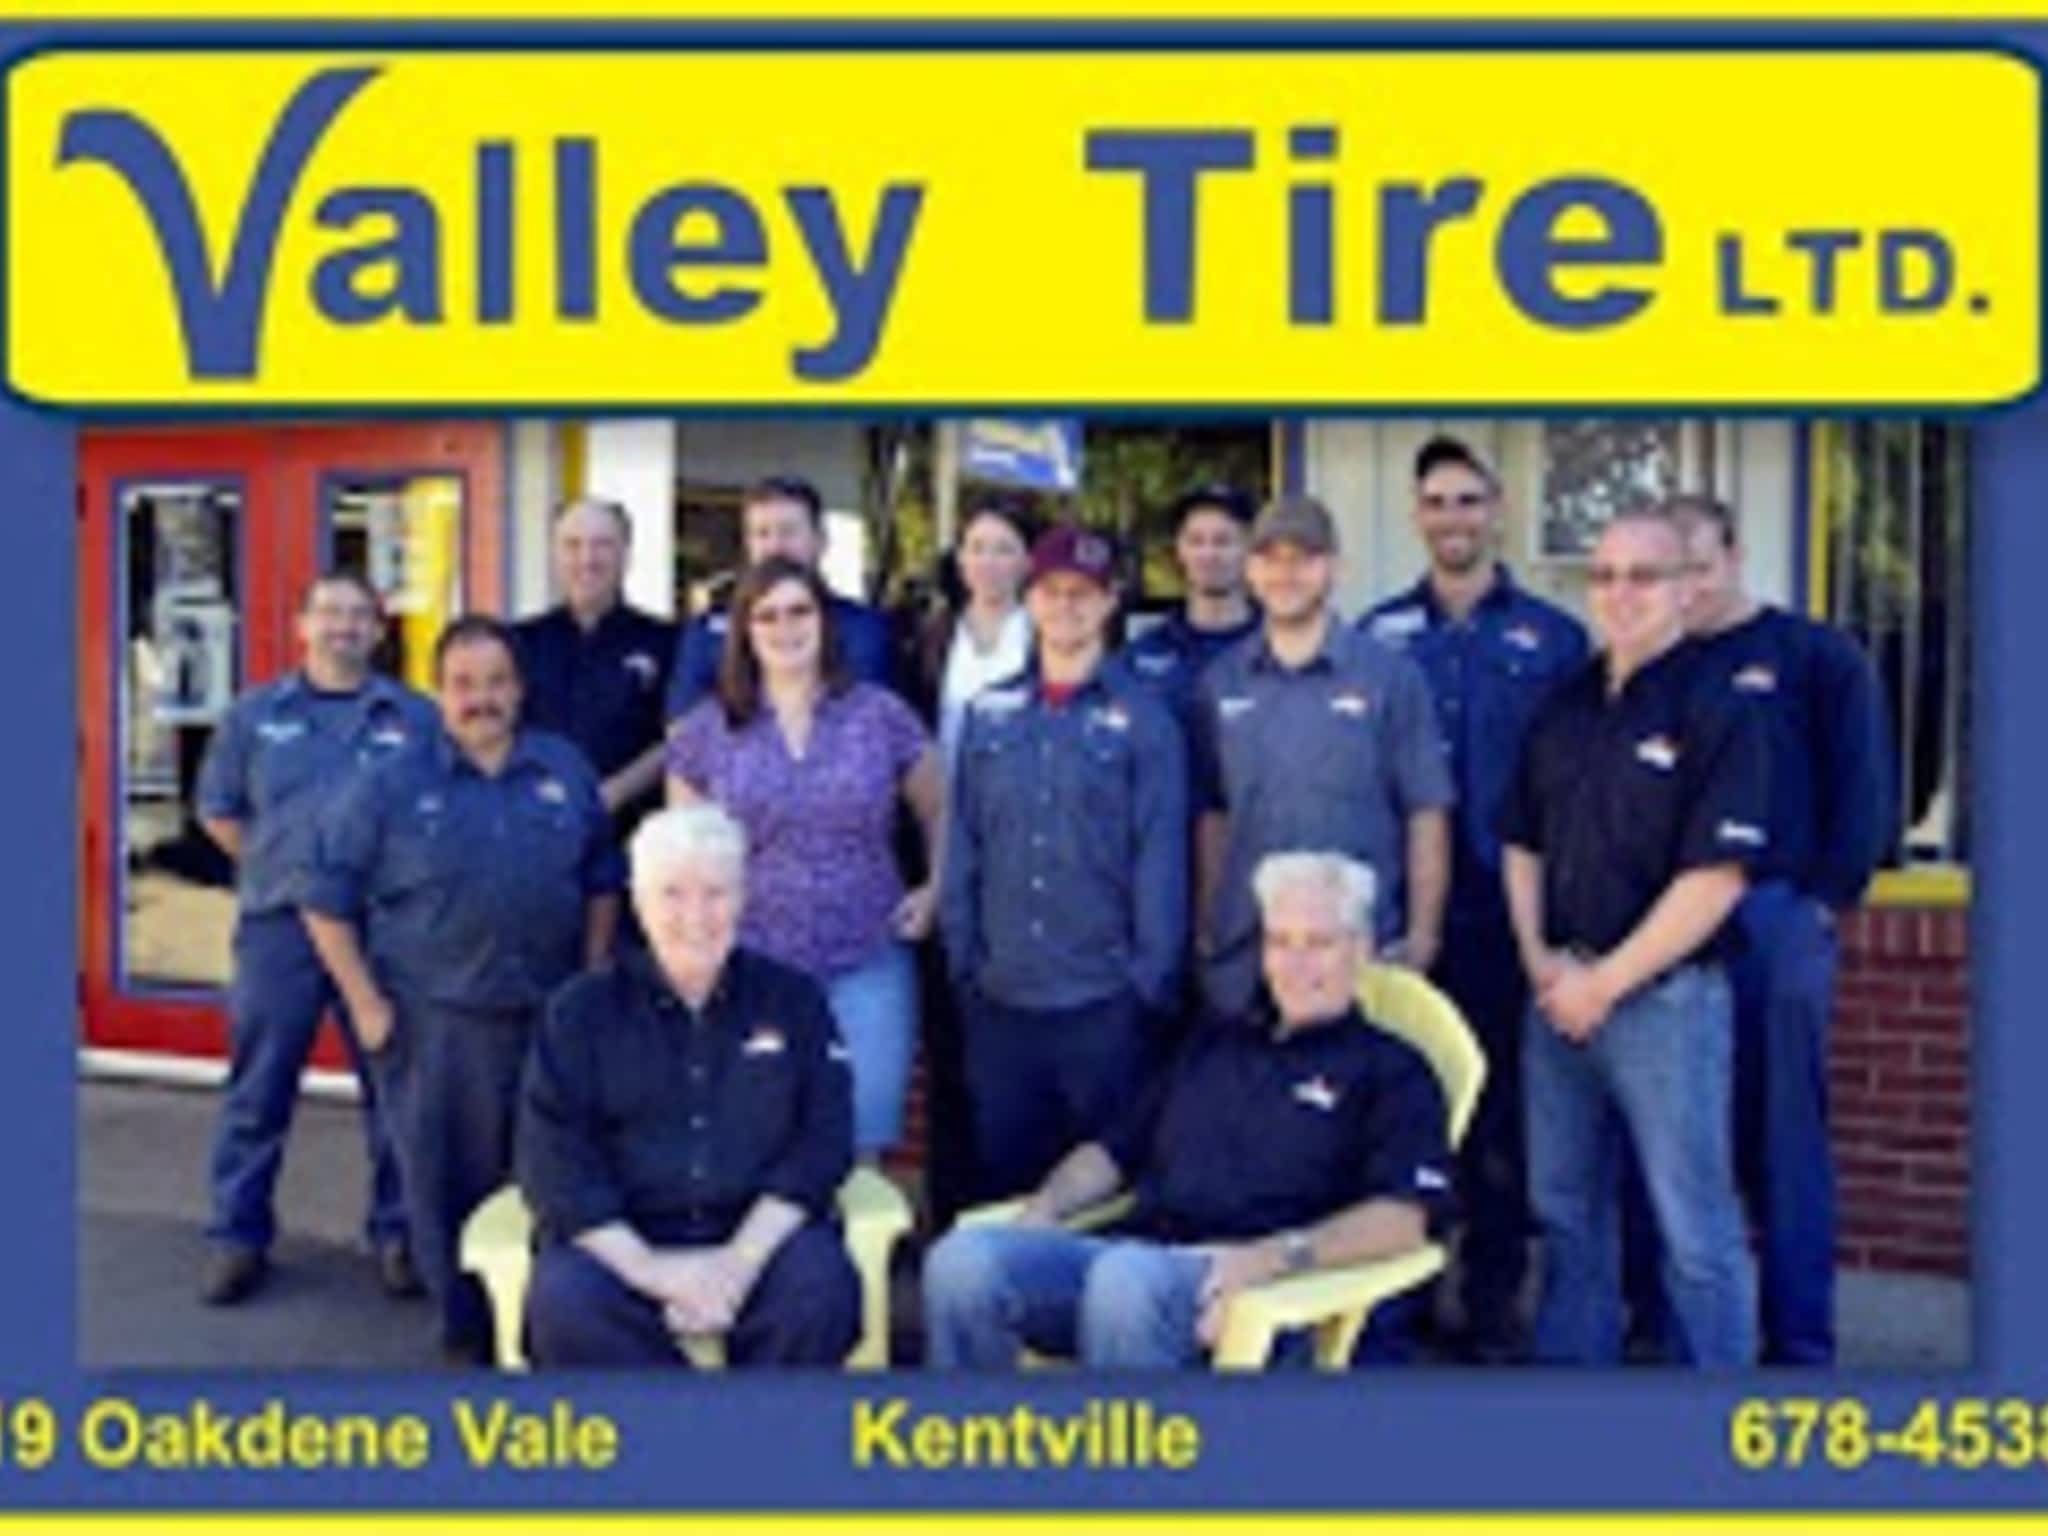 photo Valley Tire Ltd